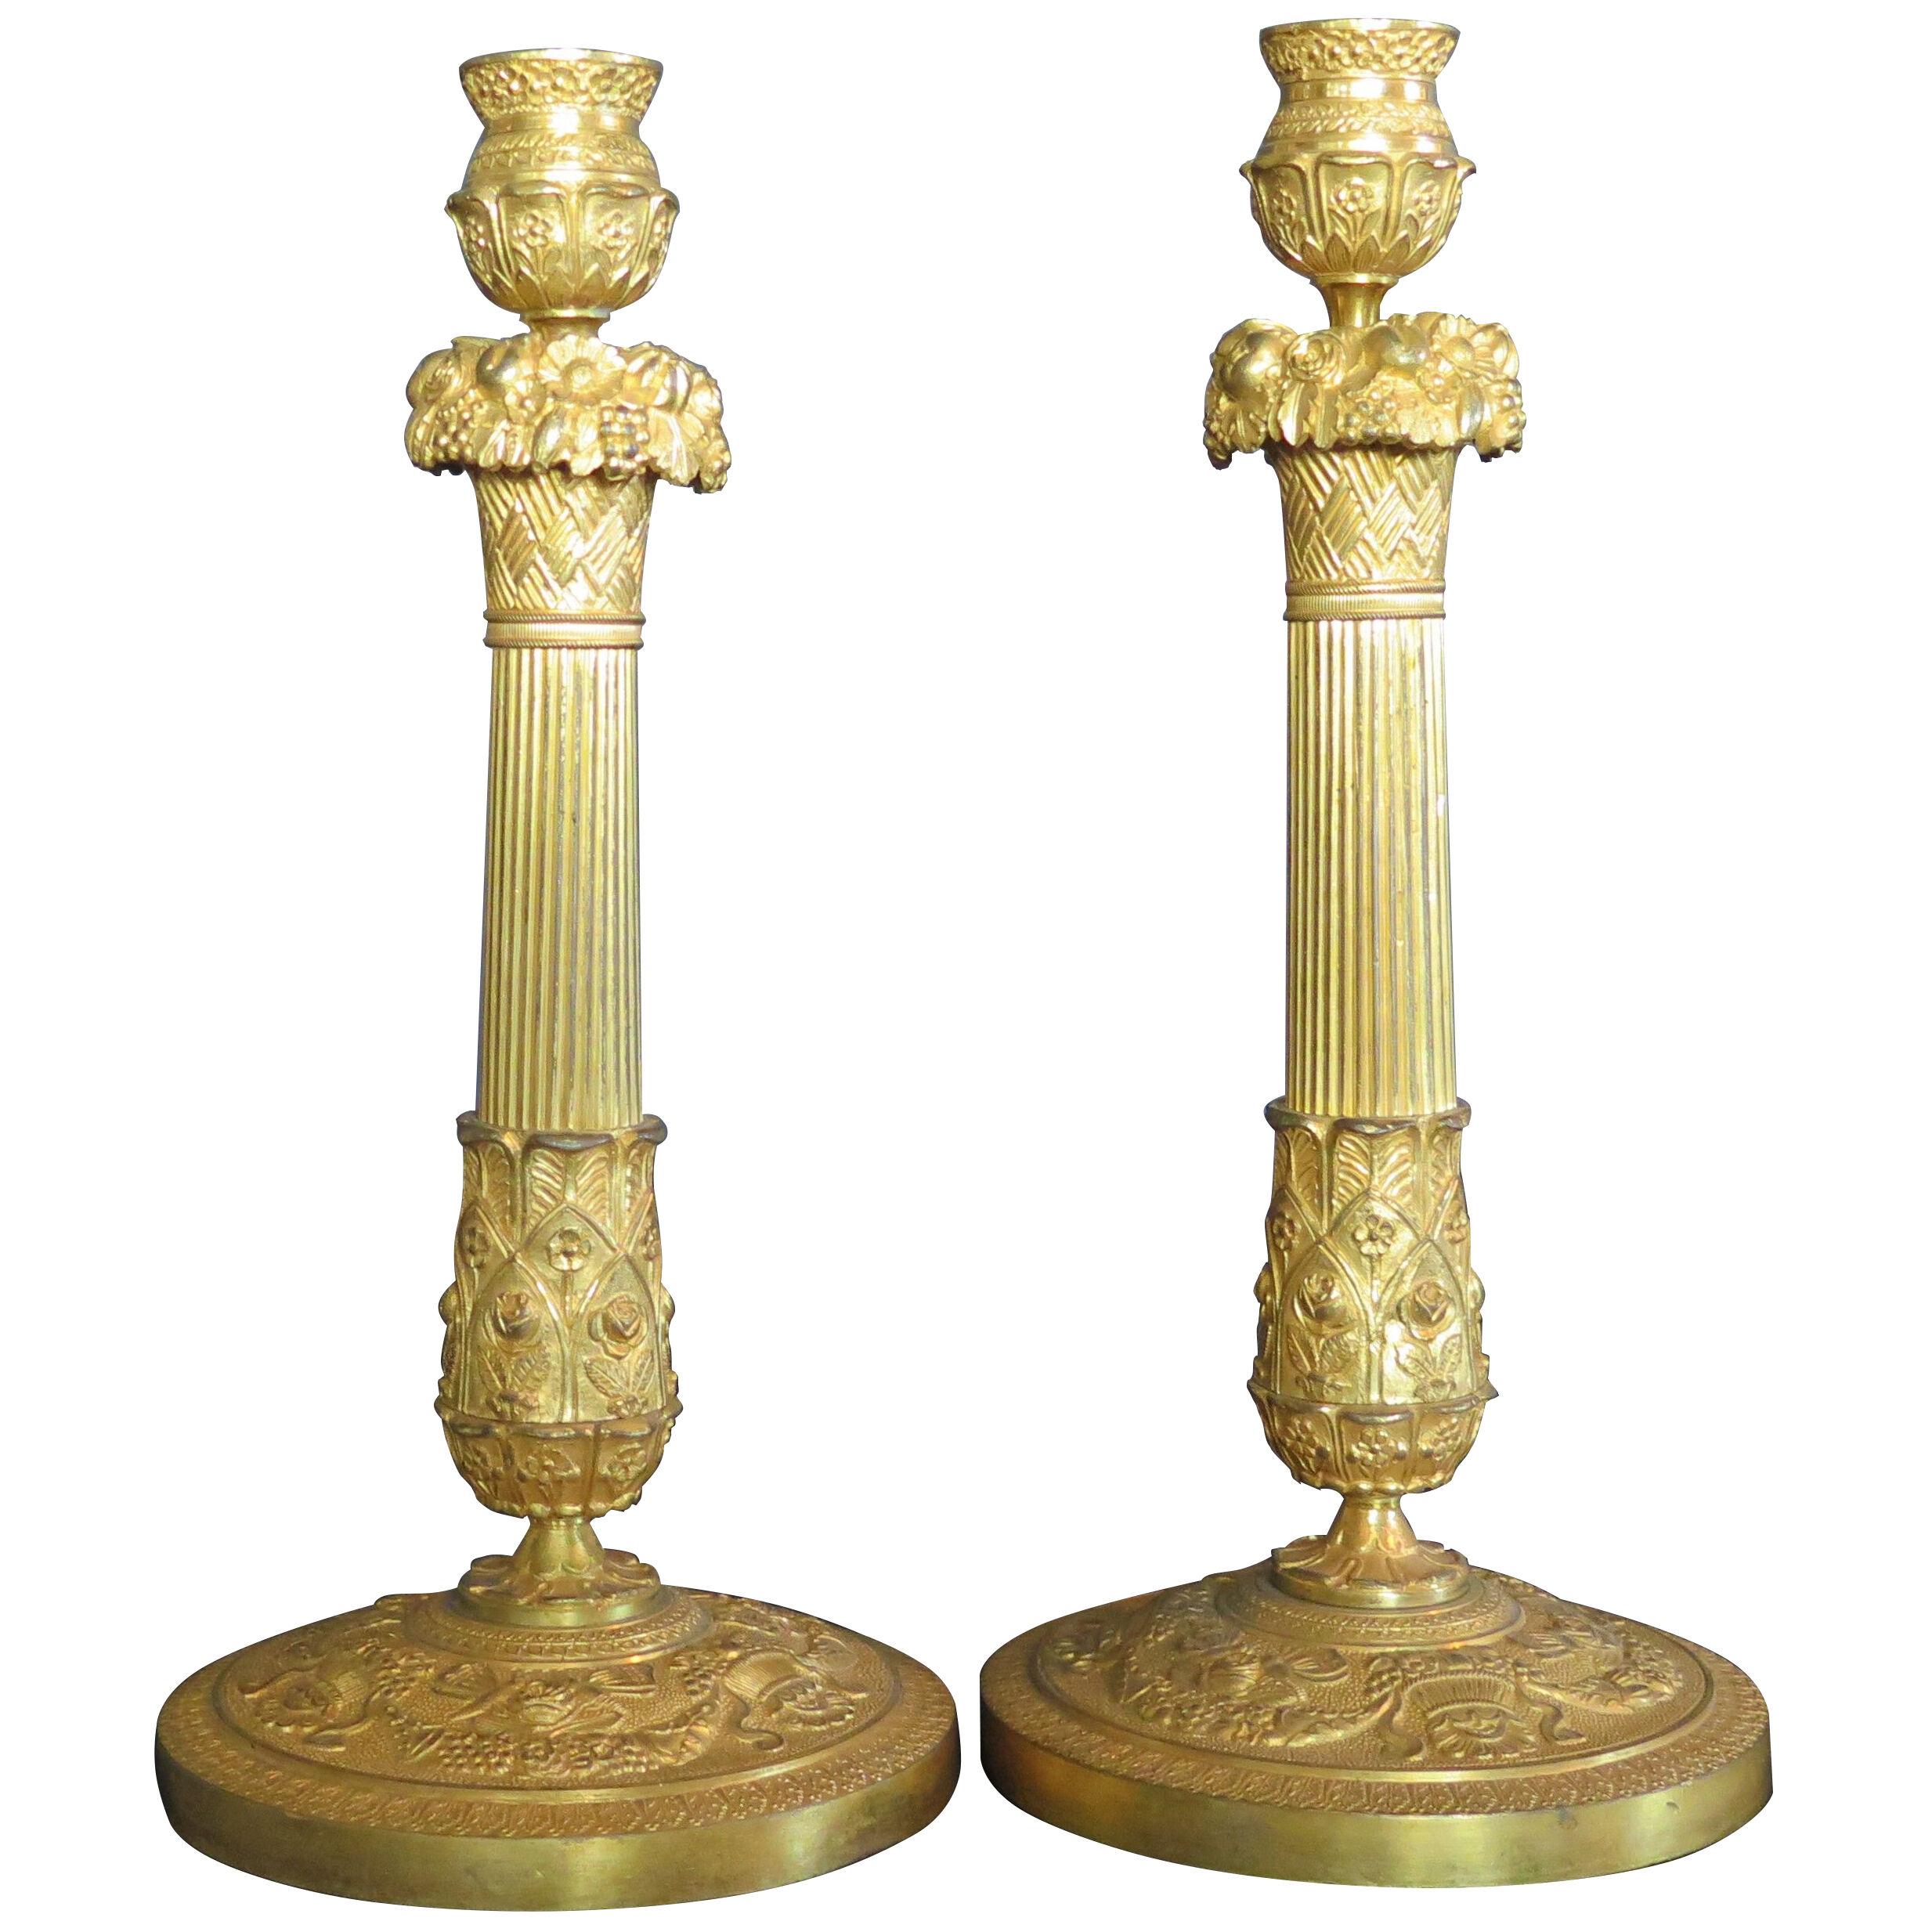 A Pair of French Empire Gilt Bronze Candlesticks